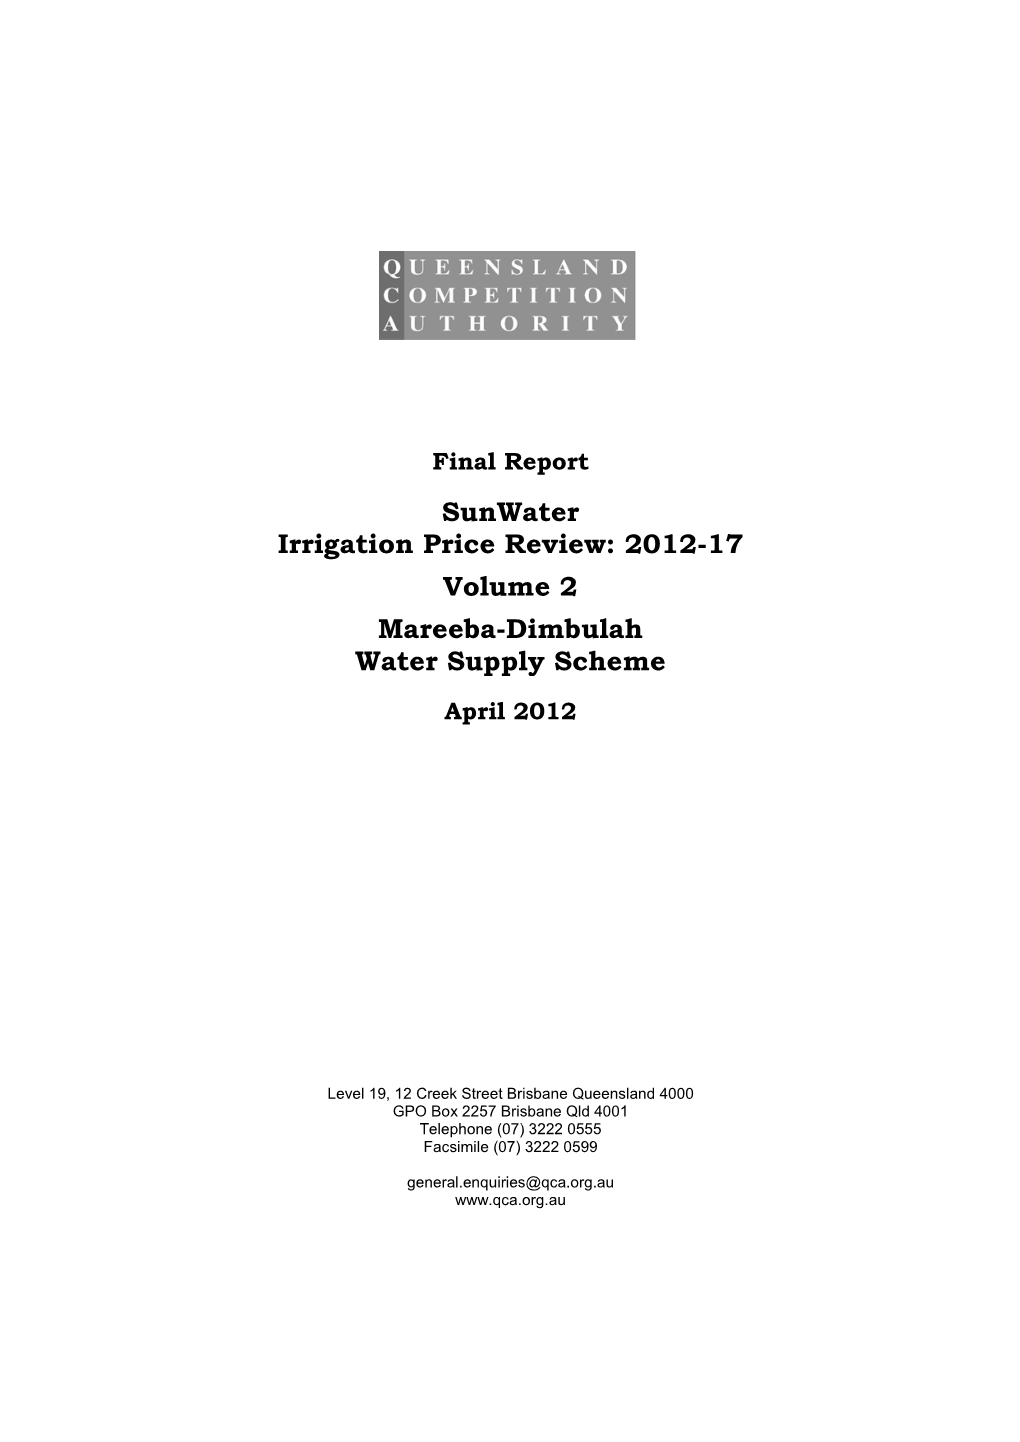 Sunwater Irrigation Price Review: 2012-17 Volume 2 Mareeba-Dimbulah Water Supply Scheme